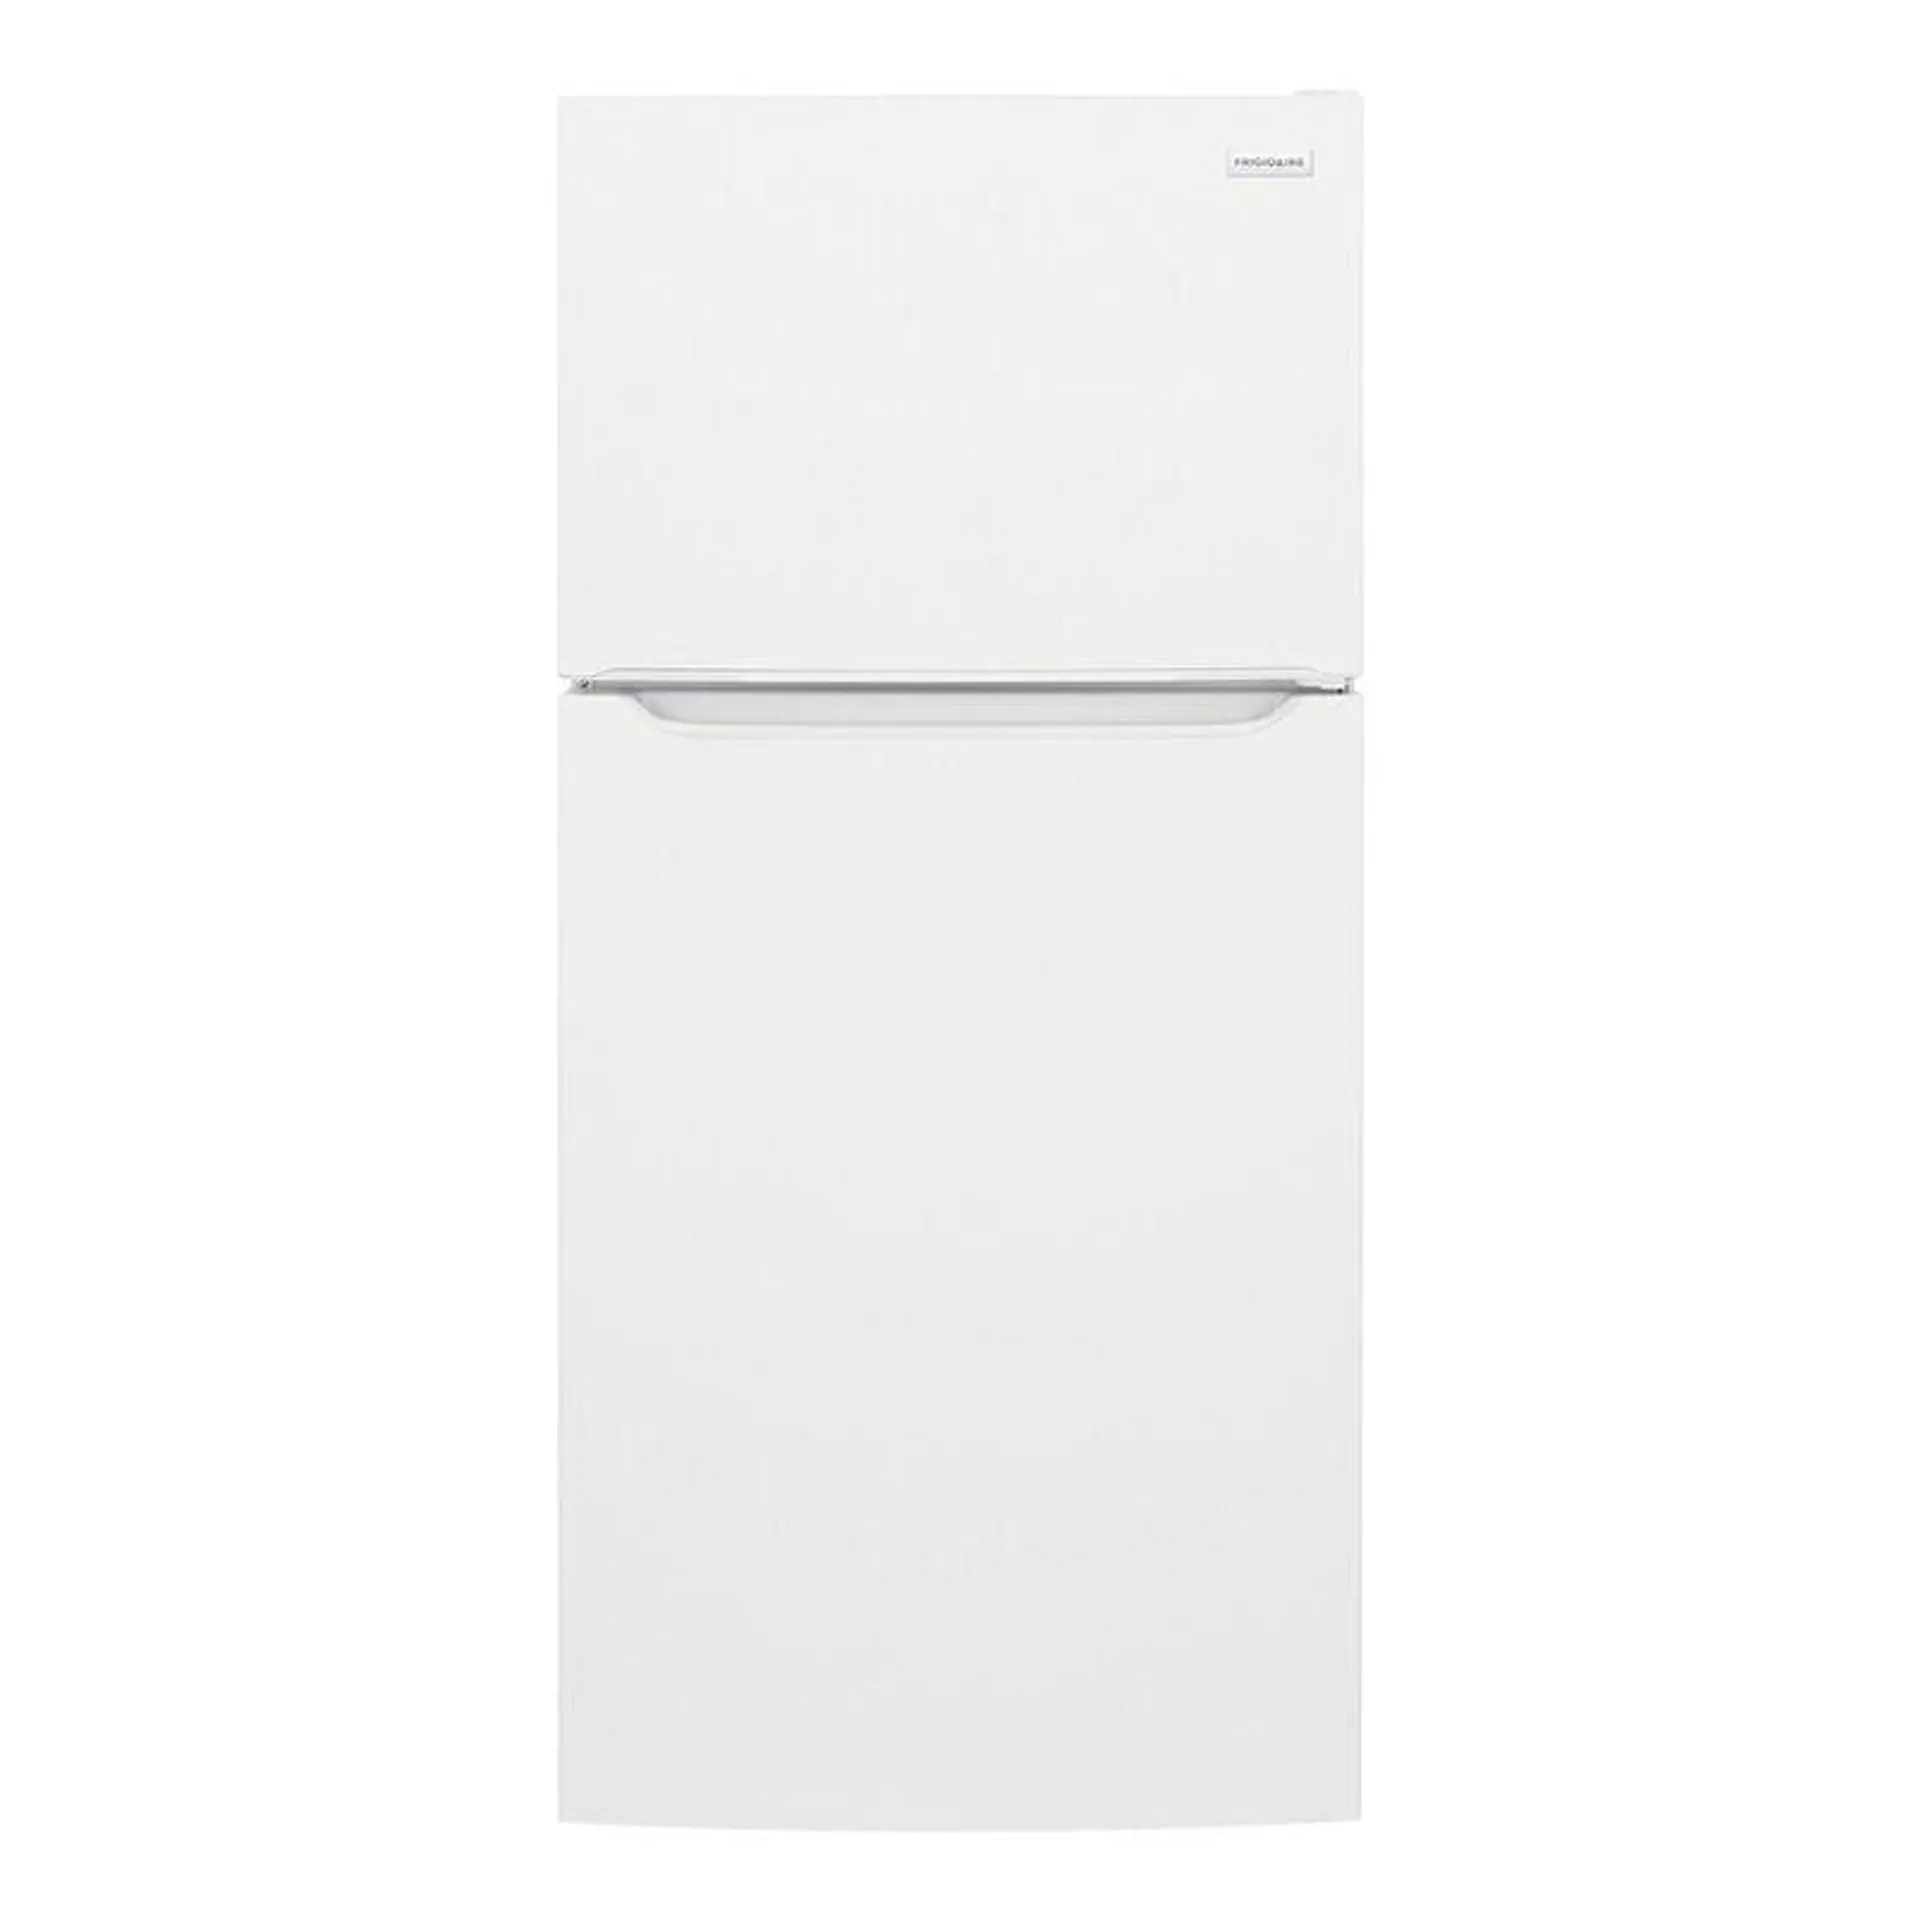 Frigidaire 30 in. 18.3 cu. ft. Top Freezer Refrigerator with Glass Shelves - White